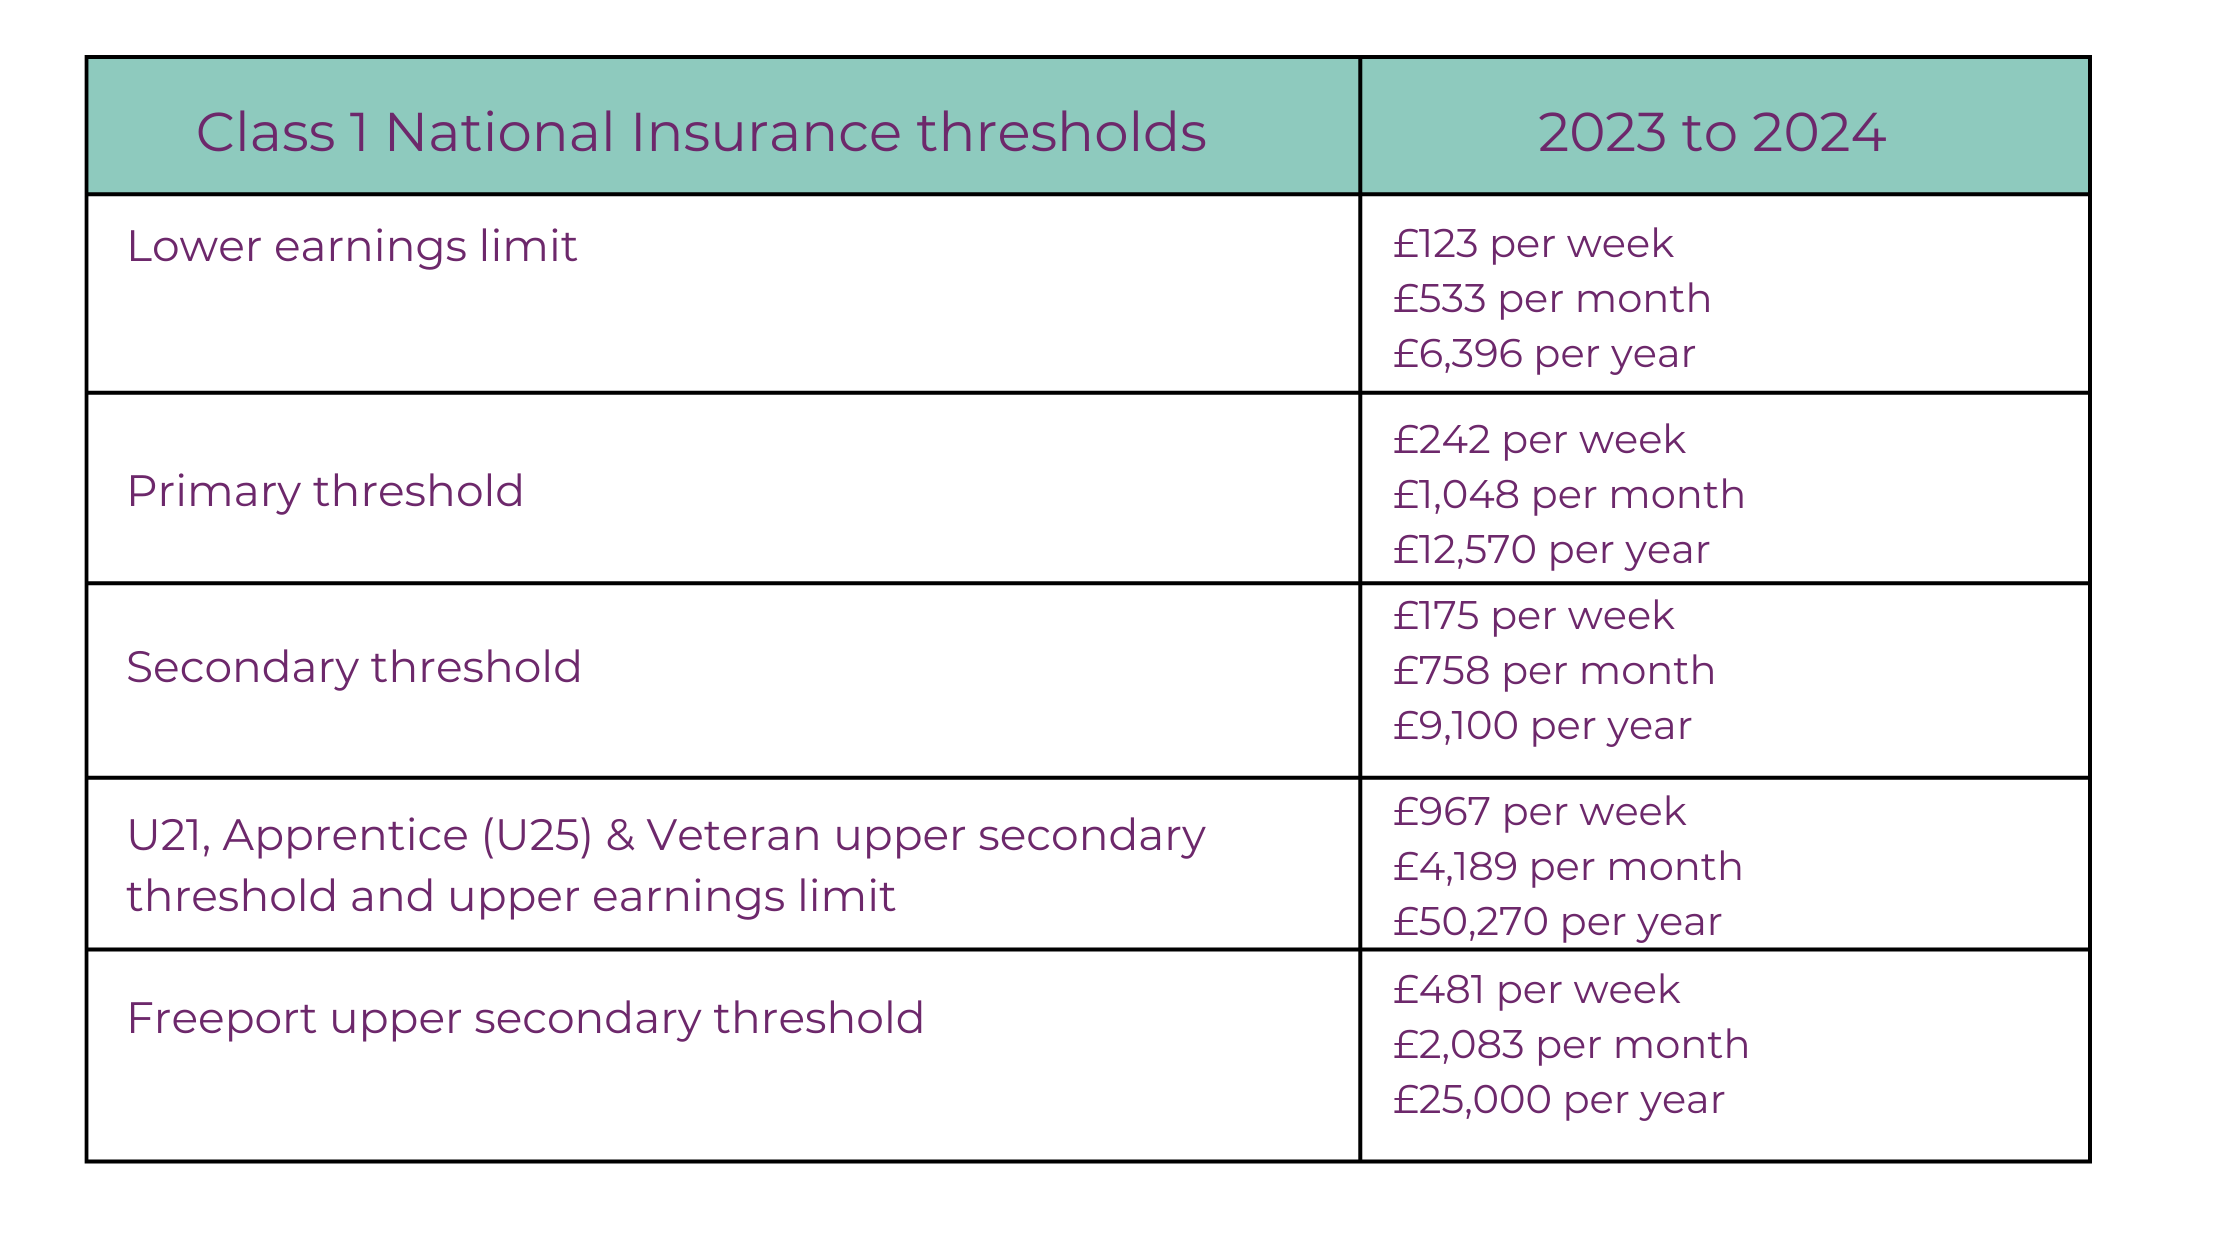 Table of national insurance thresholds